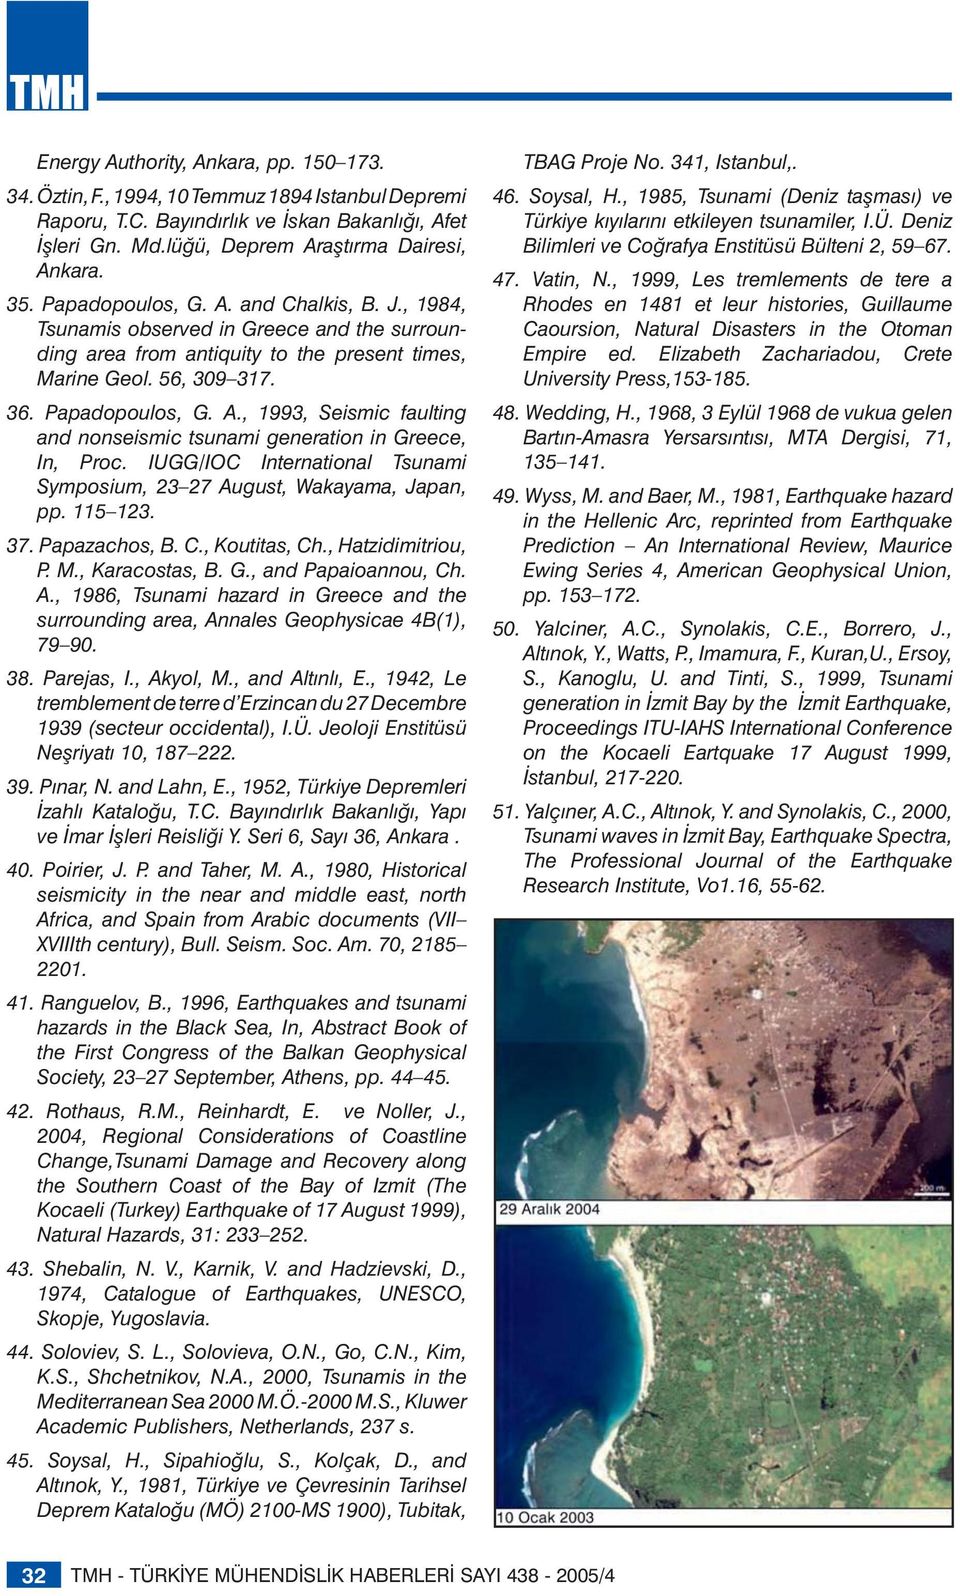 IUGG/IOC International Tsunami Symposium, 7 August, Wakayama, Japan, pp. 115 1. 7. Papazachos, B. C., Koutitas, Ch., Hatzidimitriou, P. M., Karacostas, B. G., and Papaioannou, Ch. A., 1986, Tsunami hazard in Greece and the surrounding area, Annales Geophysicae B(1), 79 90.